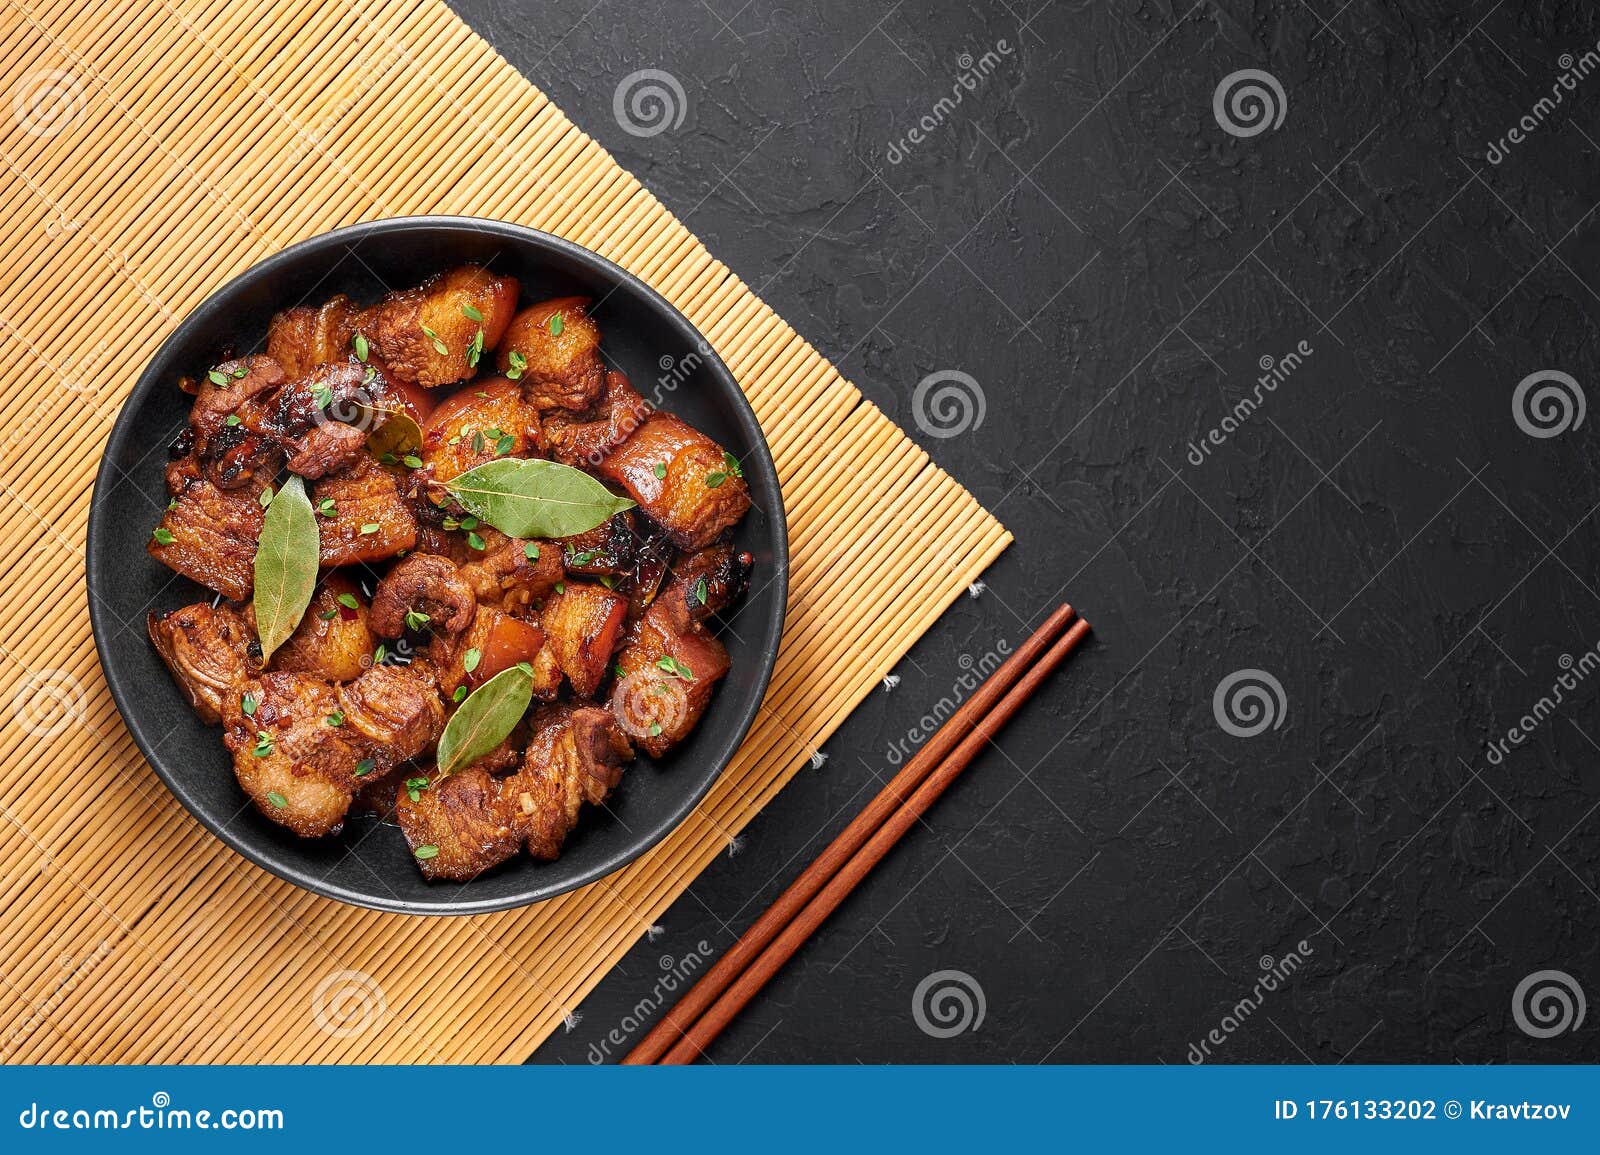 adobo pork in black bowl at dark slate background. pork adobo or adobong baboy is filipino cuisine dish. filipino food